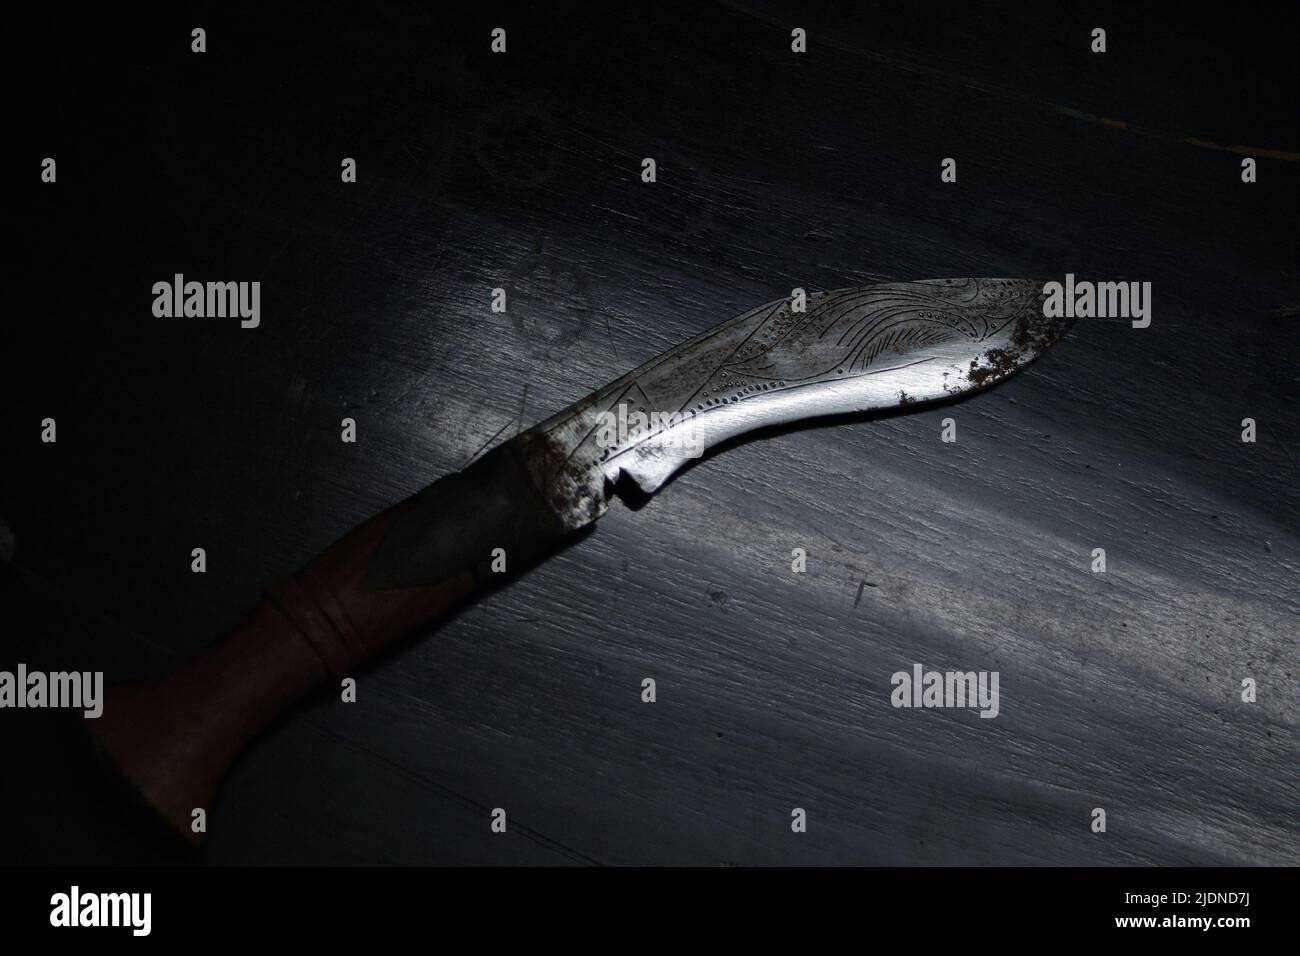 Shining Kukri knife or Nepalese machete in dramatic light, top view. Stock Photo